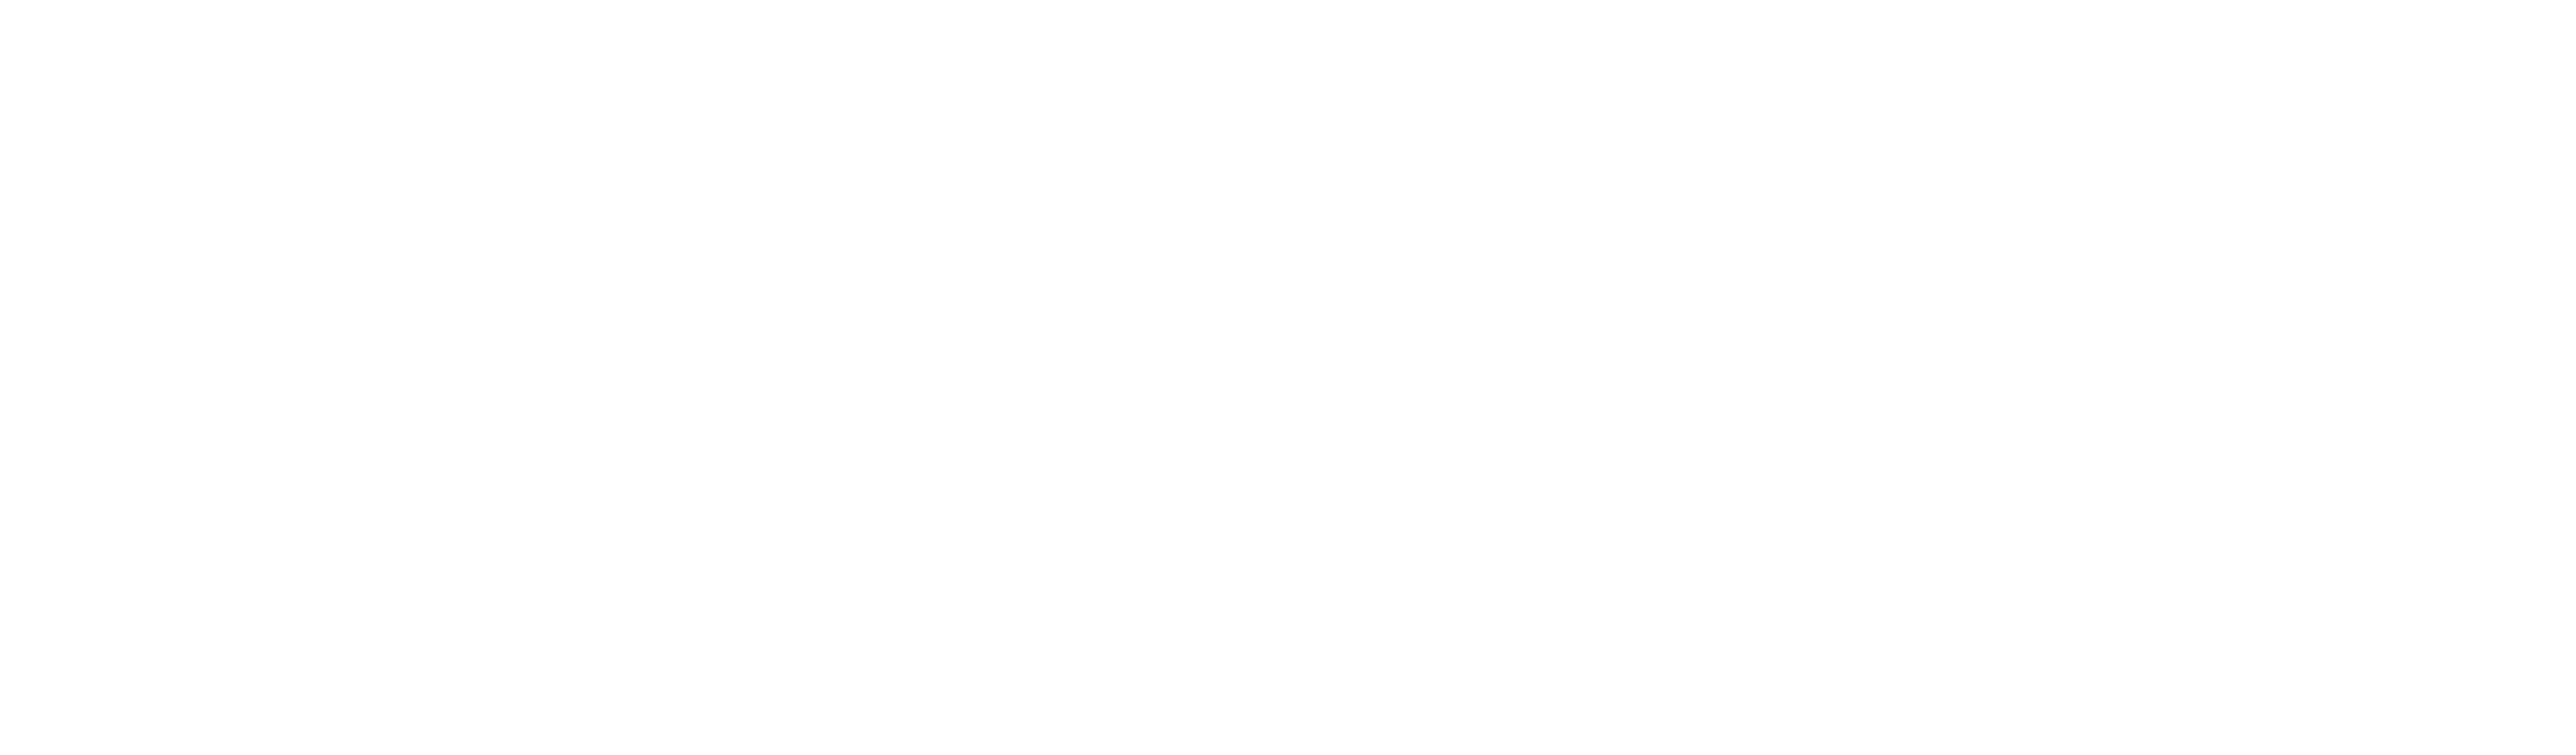 Brosnan Innovation Lab_White_Logo